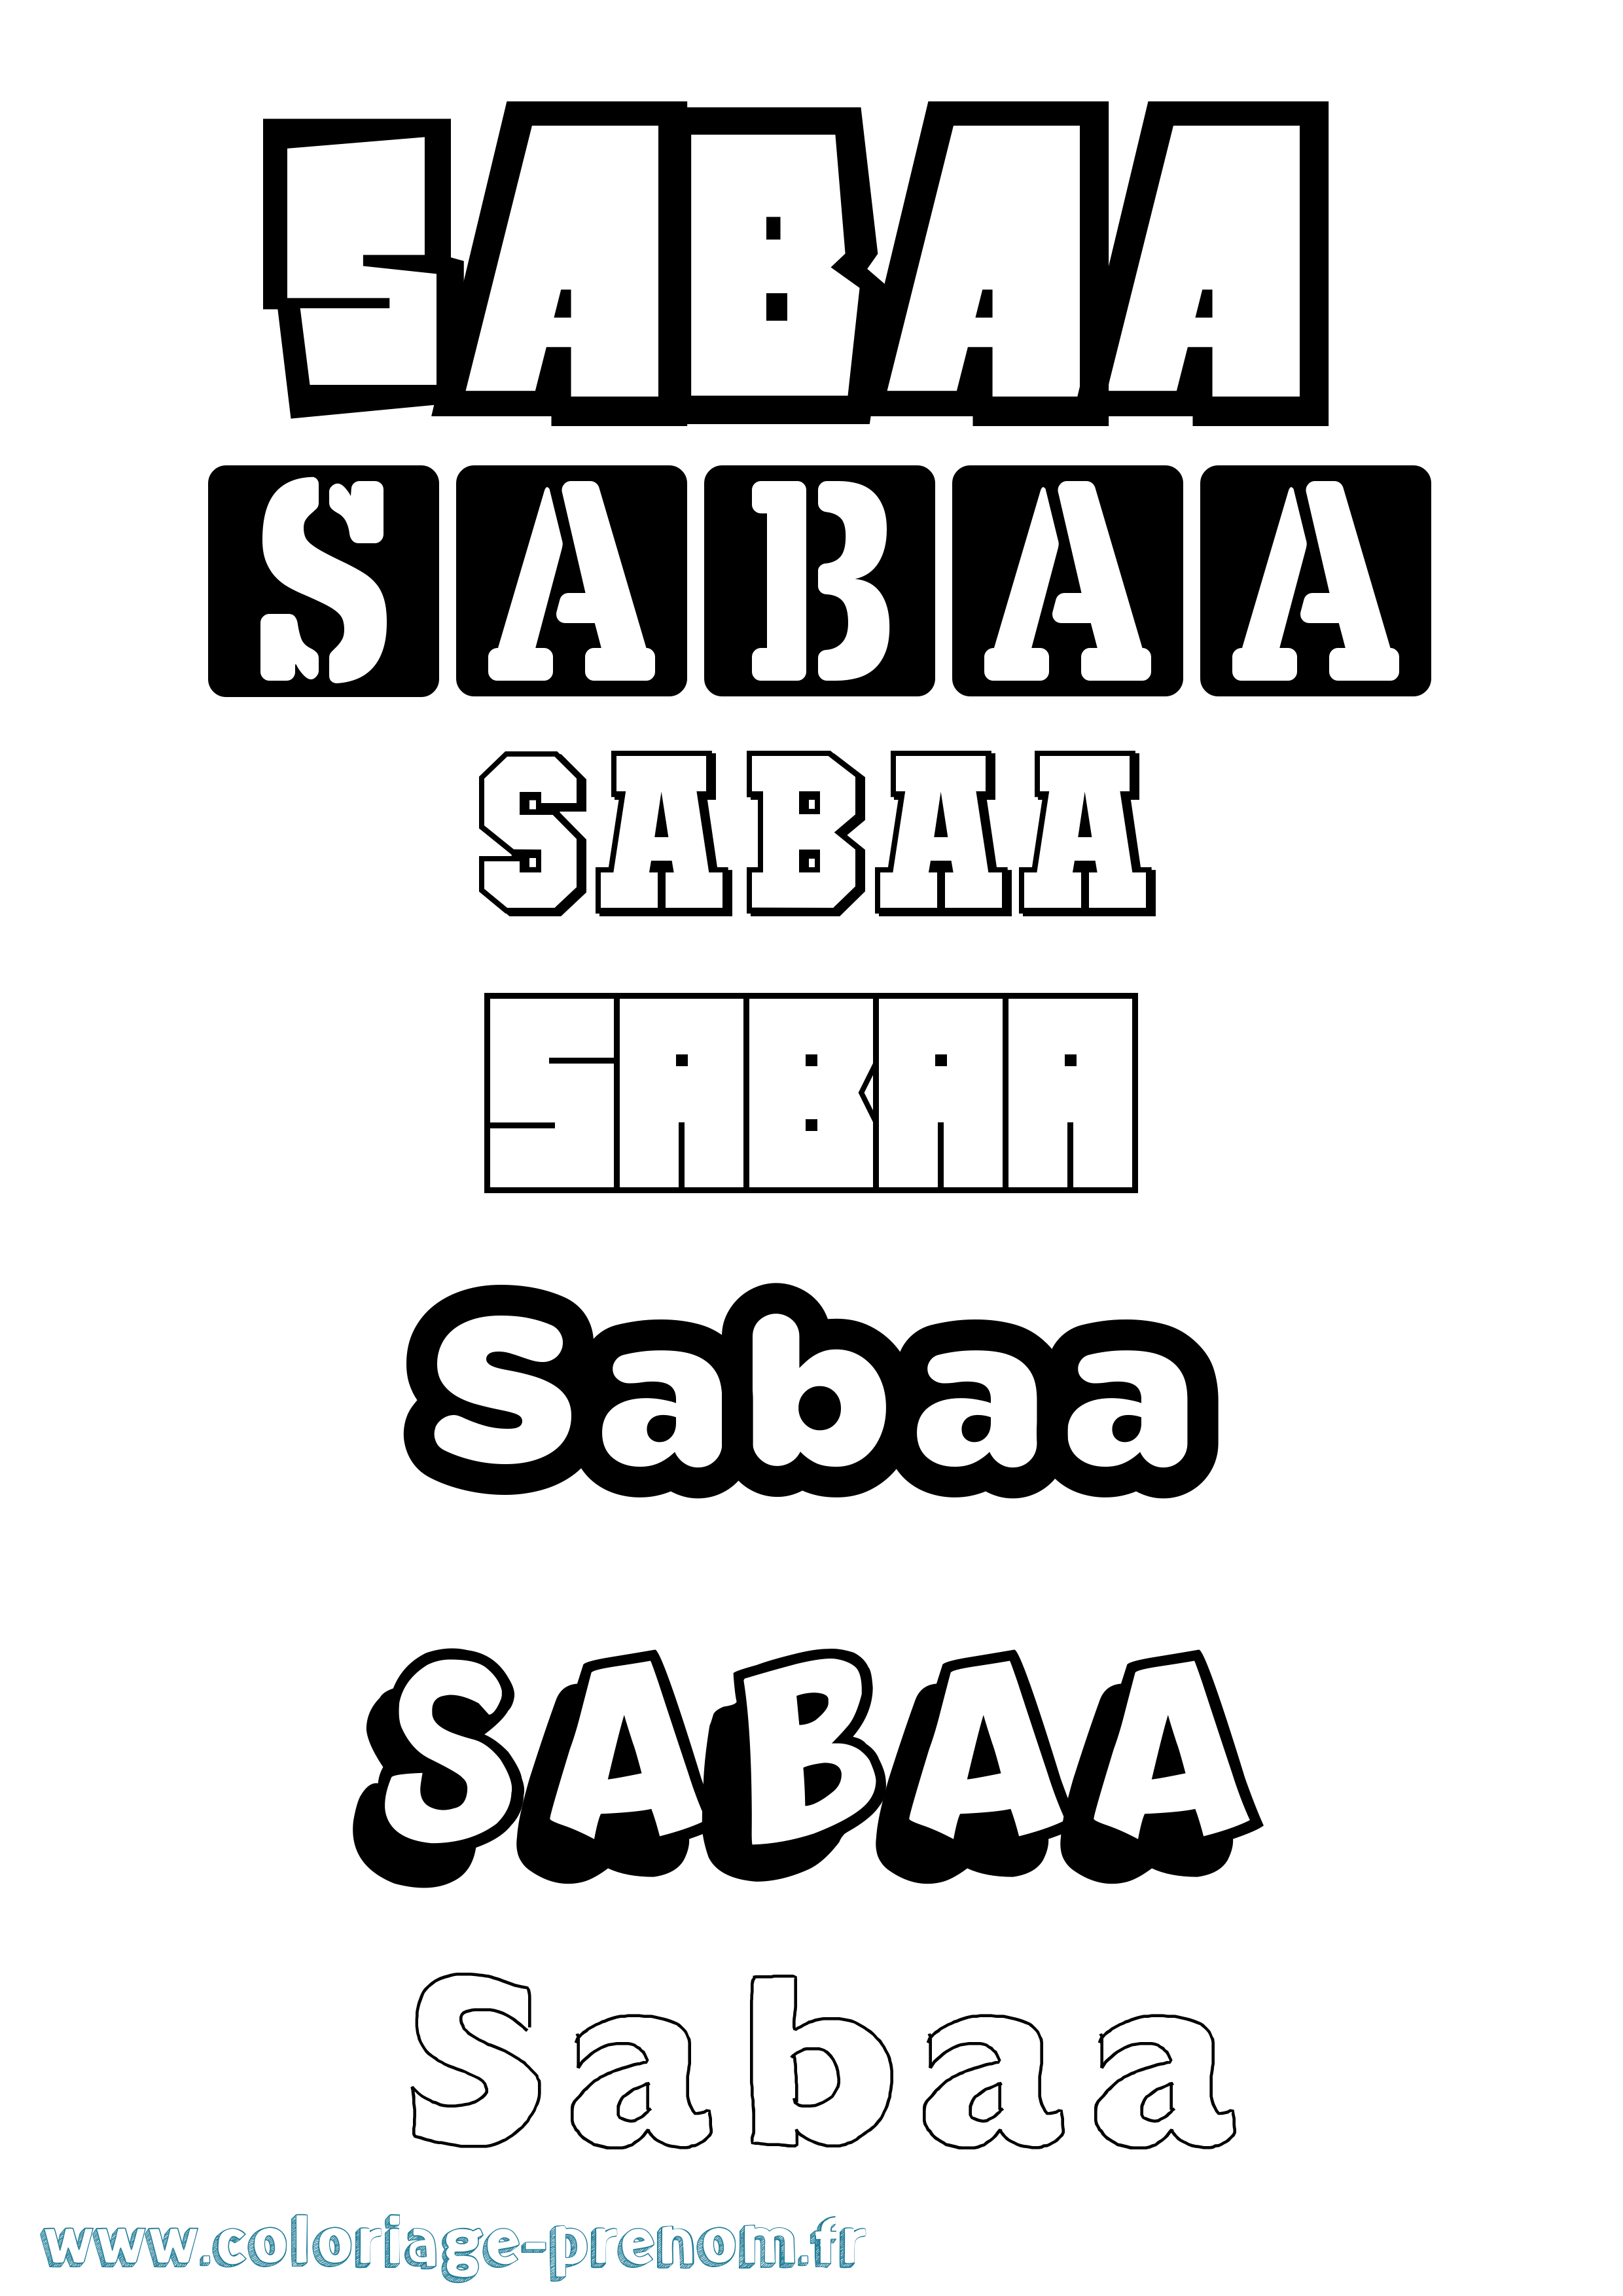 Coloriage prénom Sabaa Simple